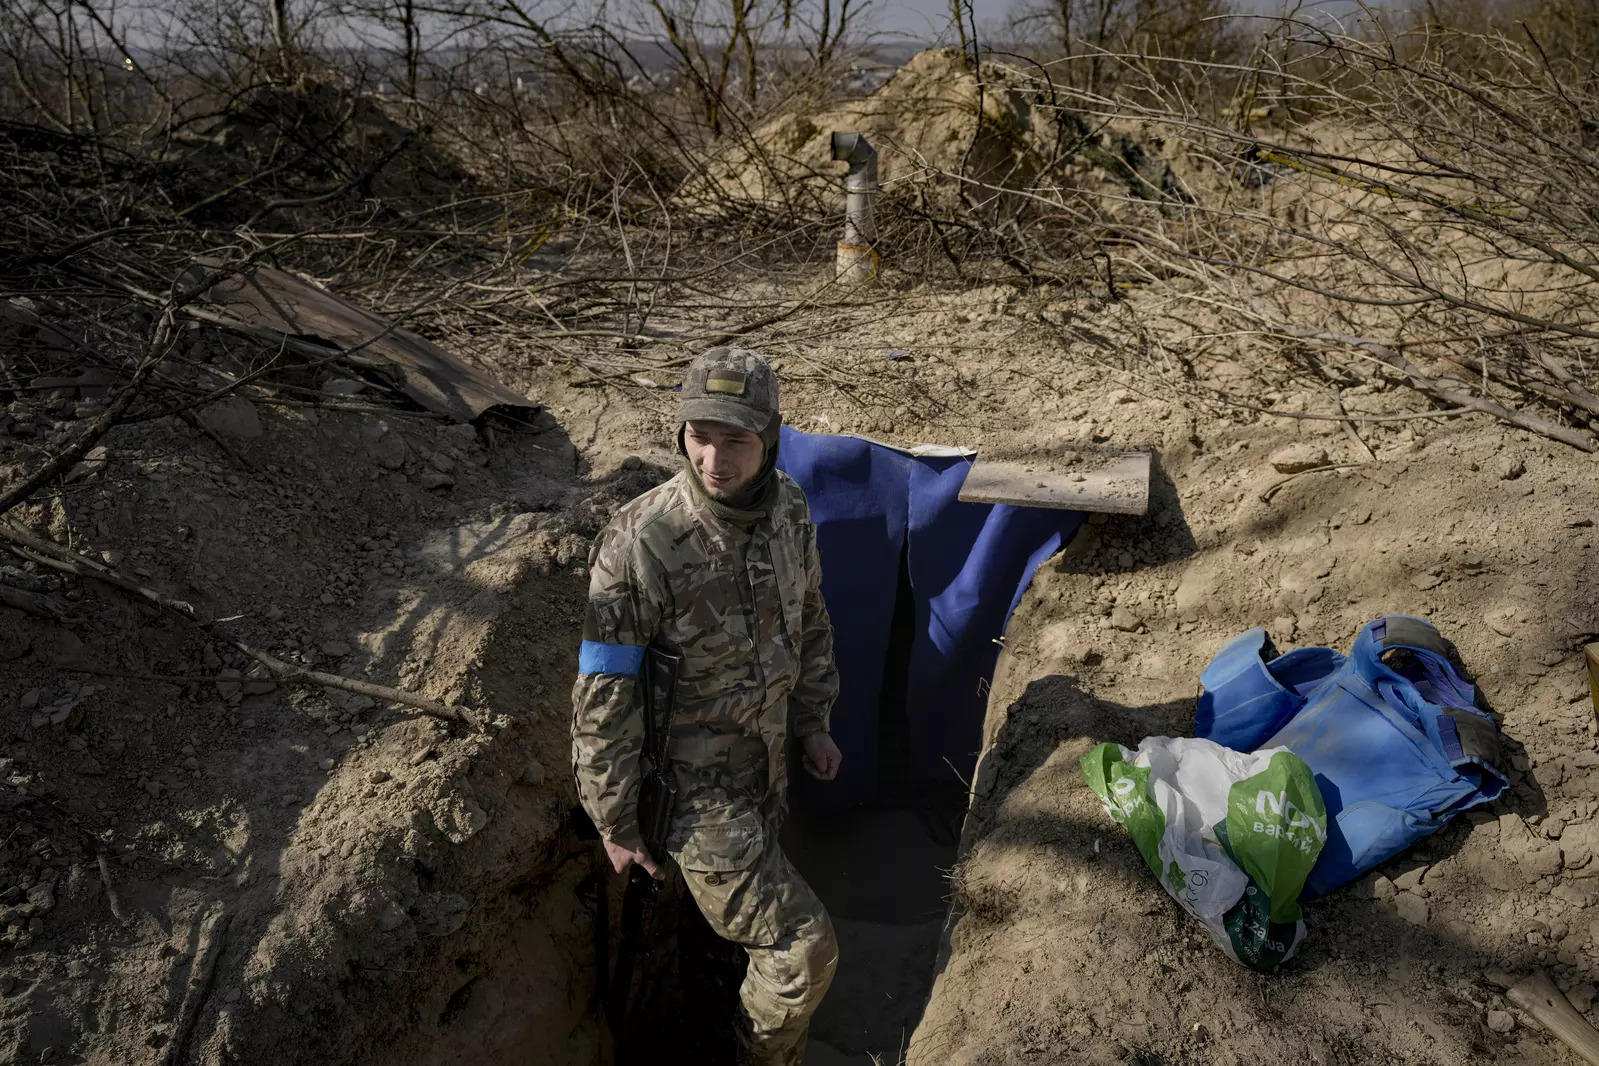 Russia Ukraine War Battle for Kyiv